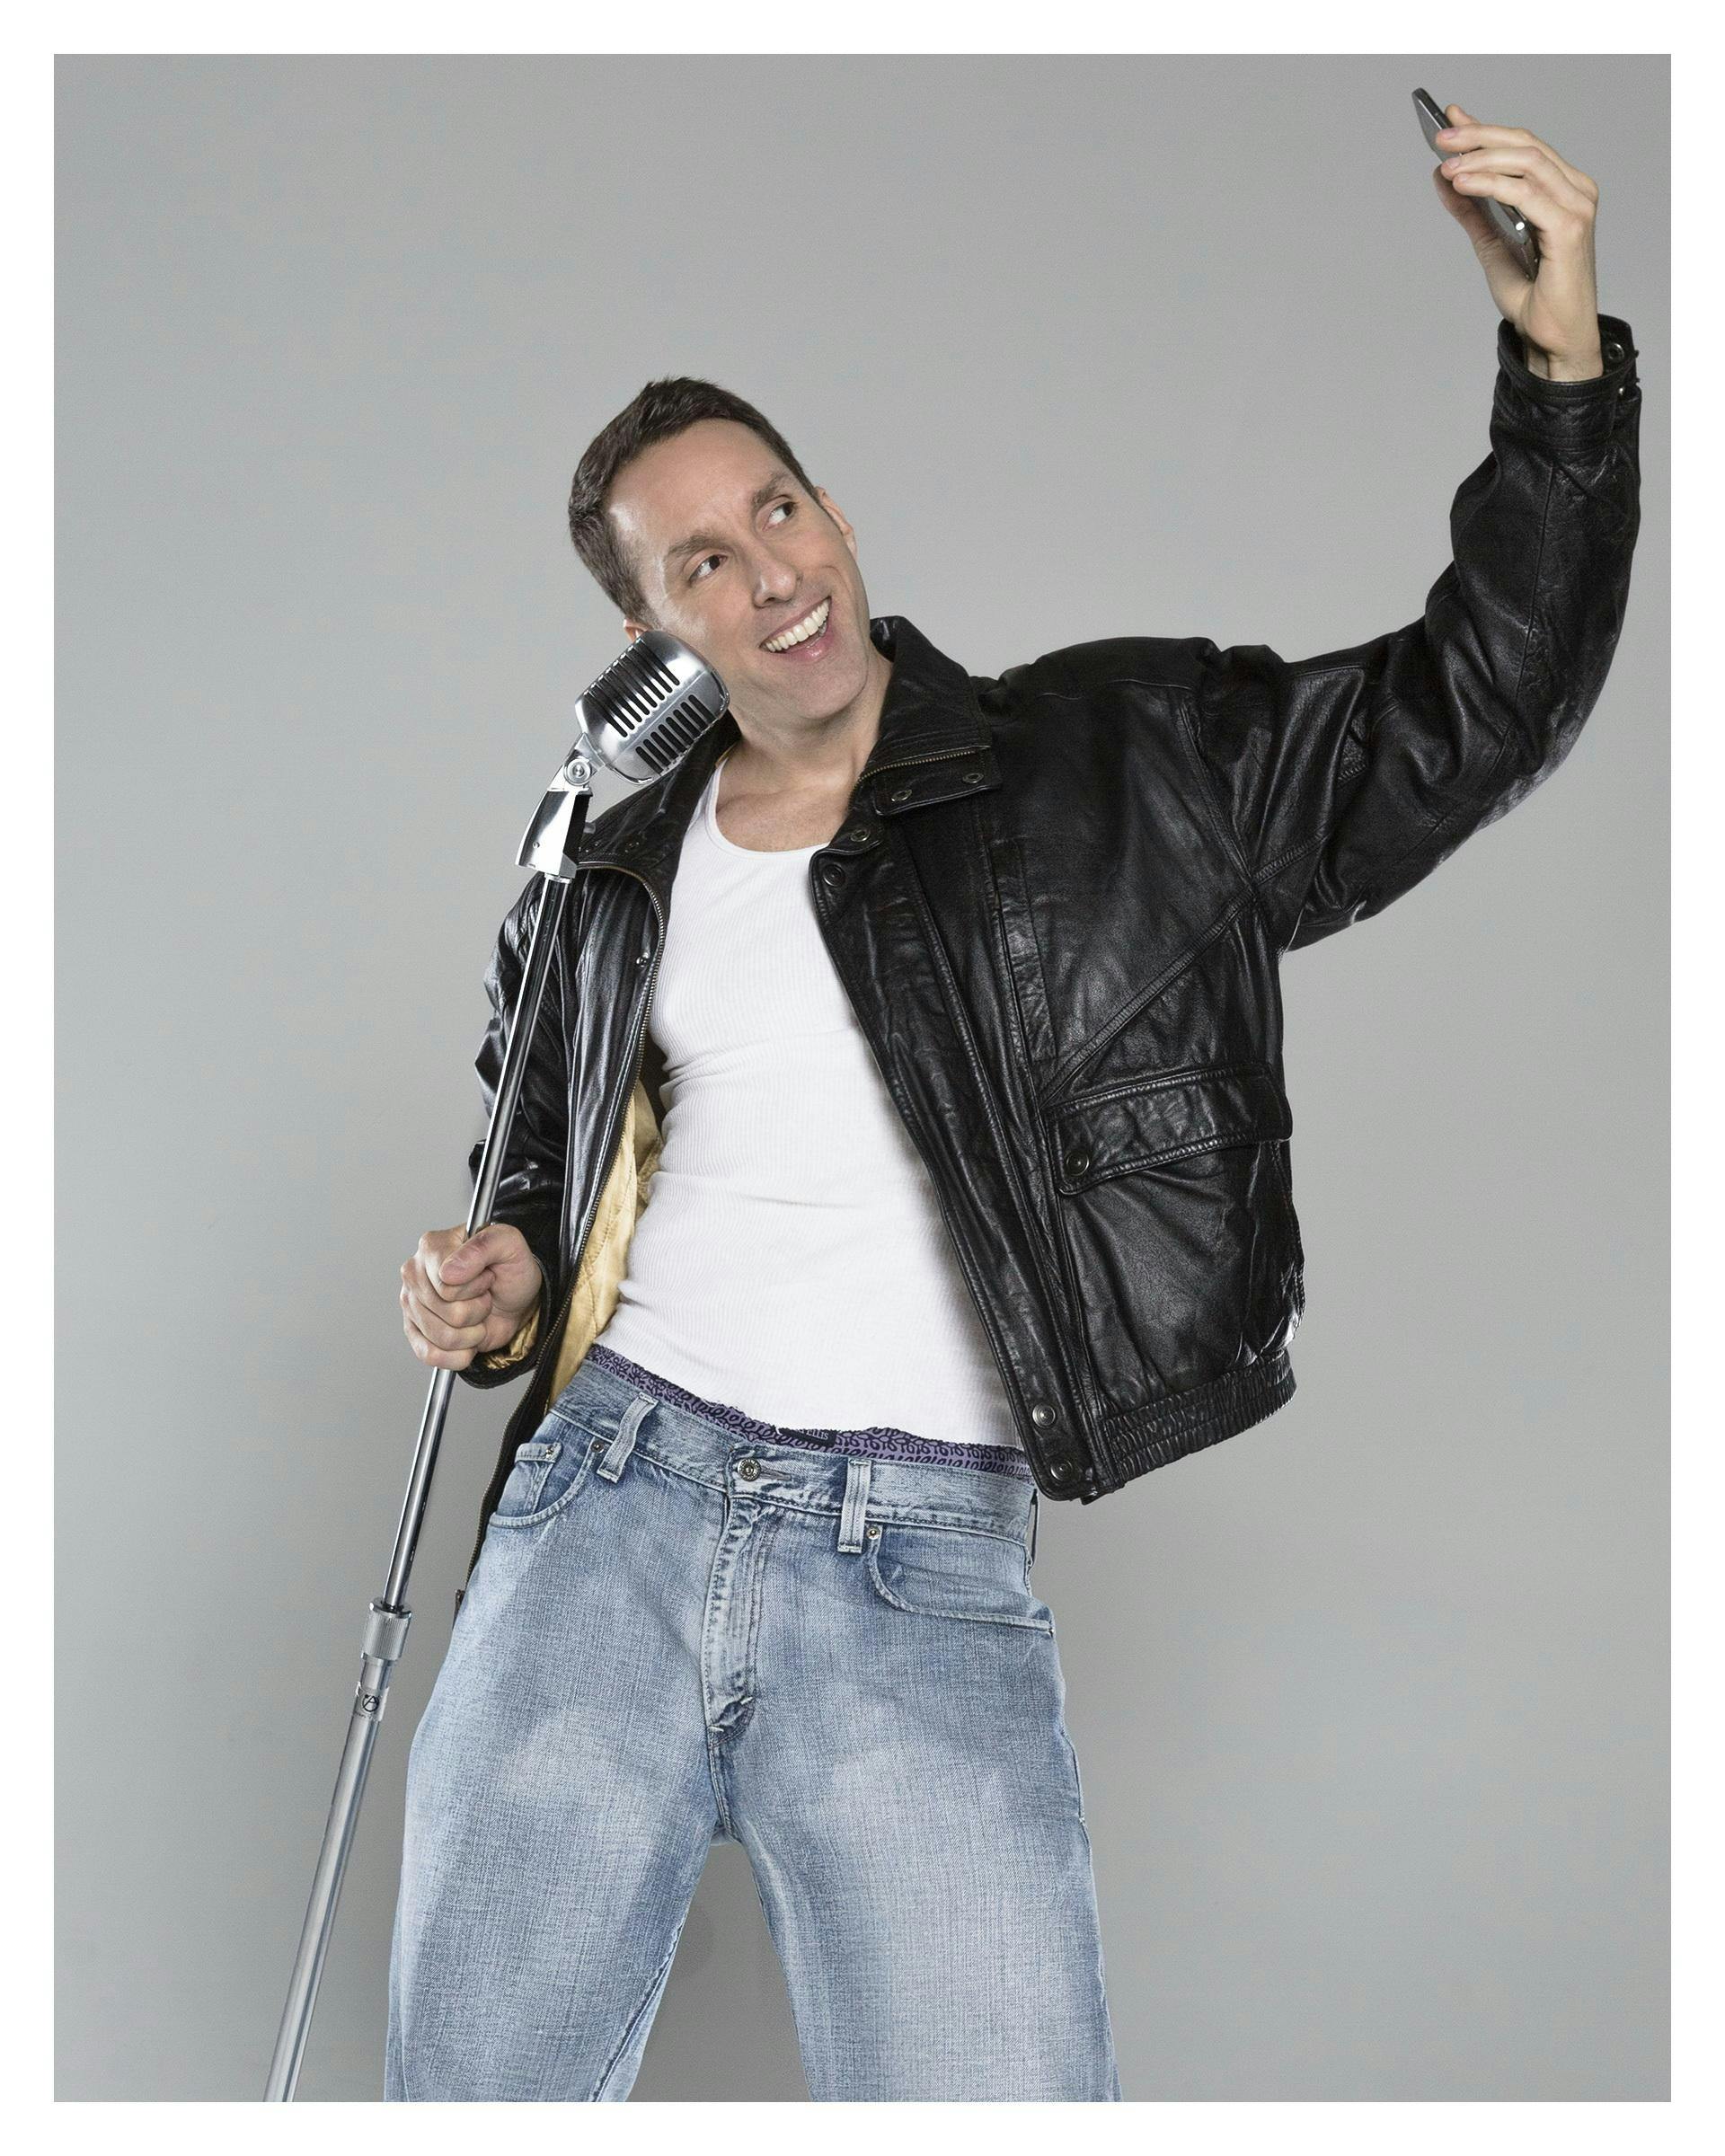 Comedian Carl Rimi live at Off the hook comedy club Naples, Florida